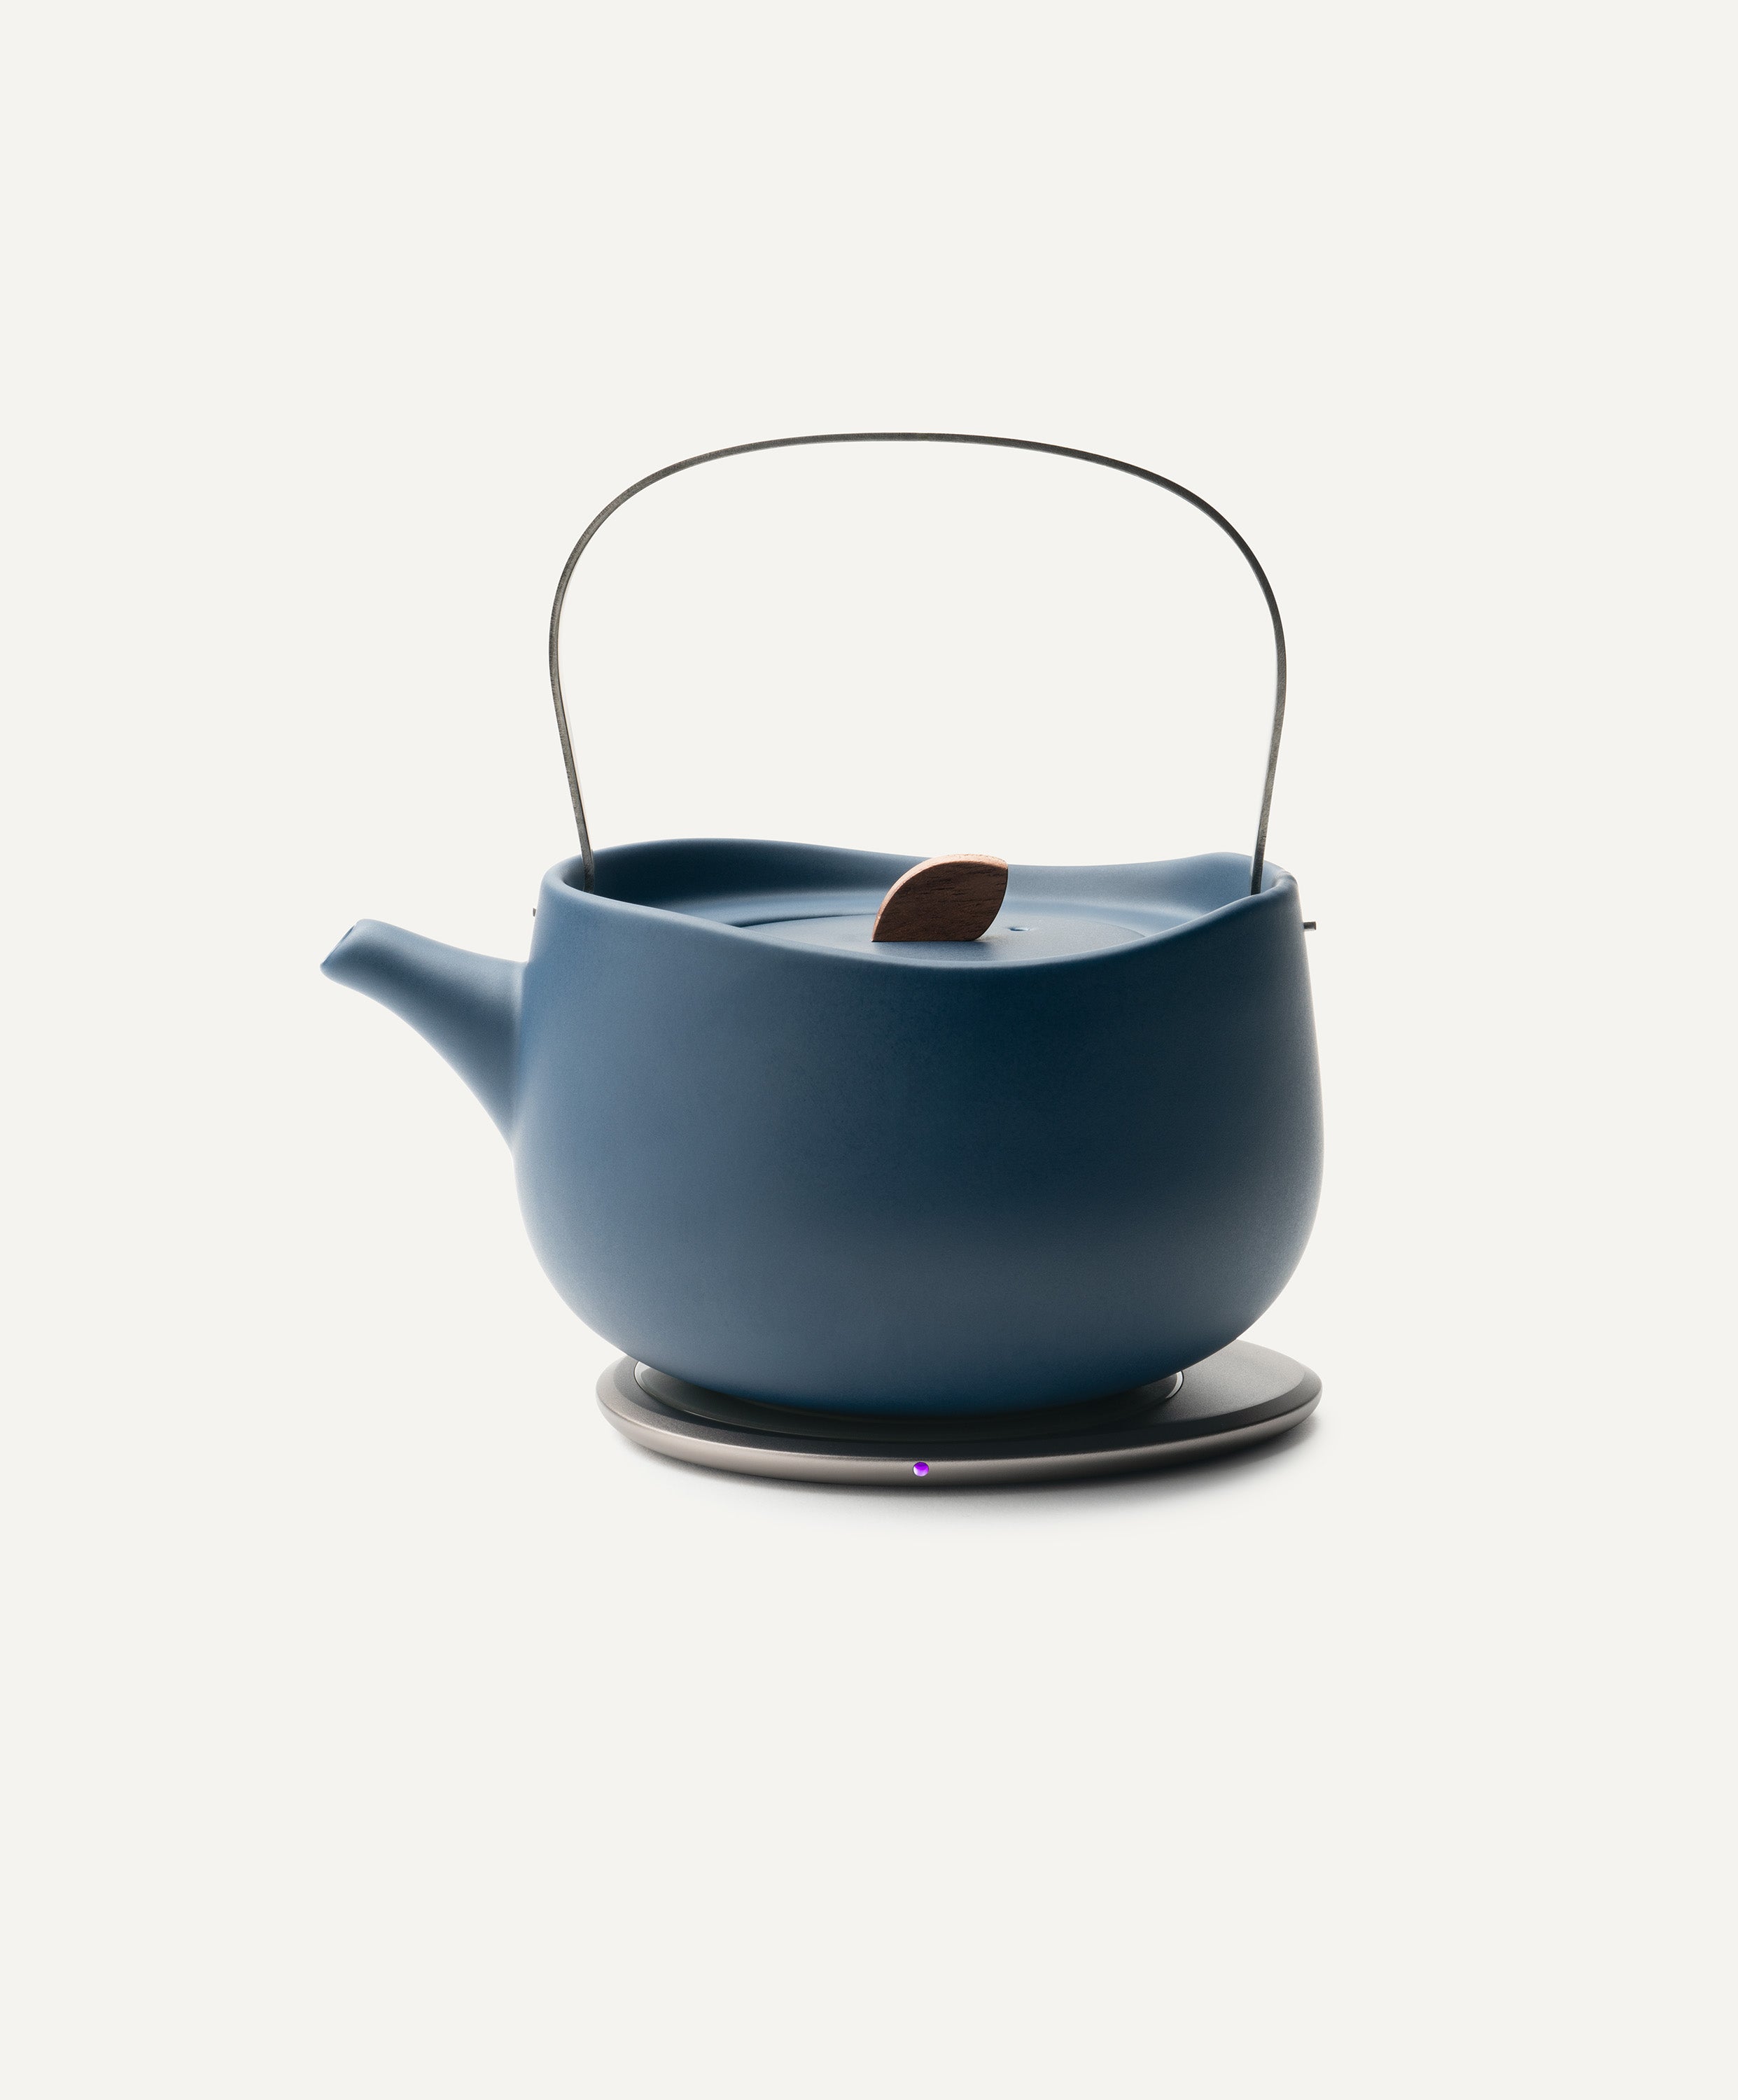 Leiph Self-heating Teapot Set - Deep Navy